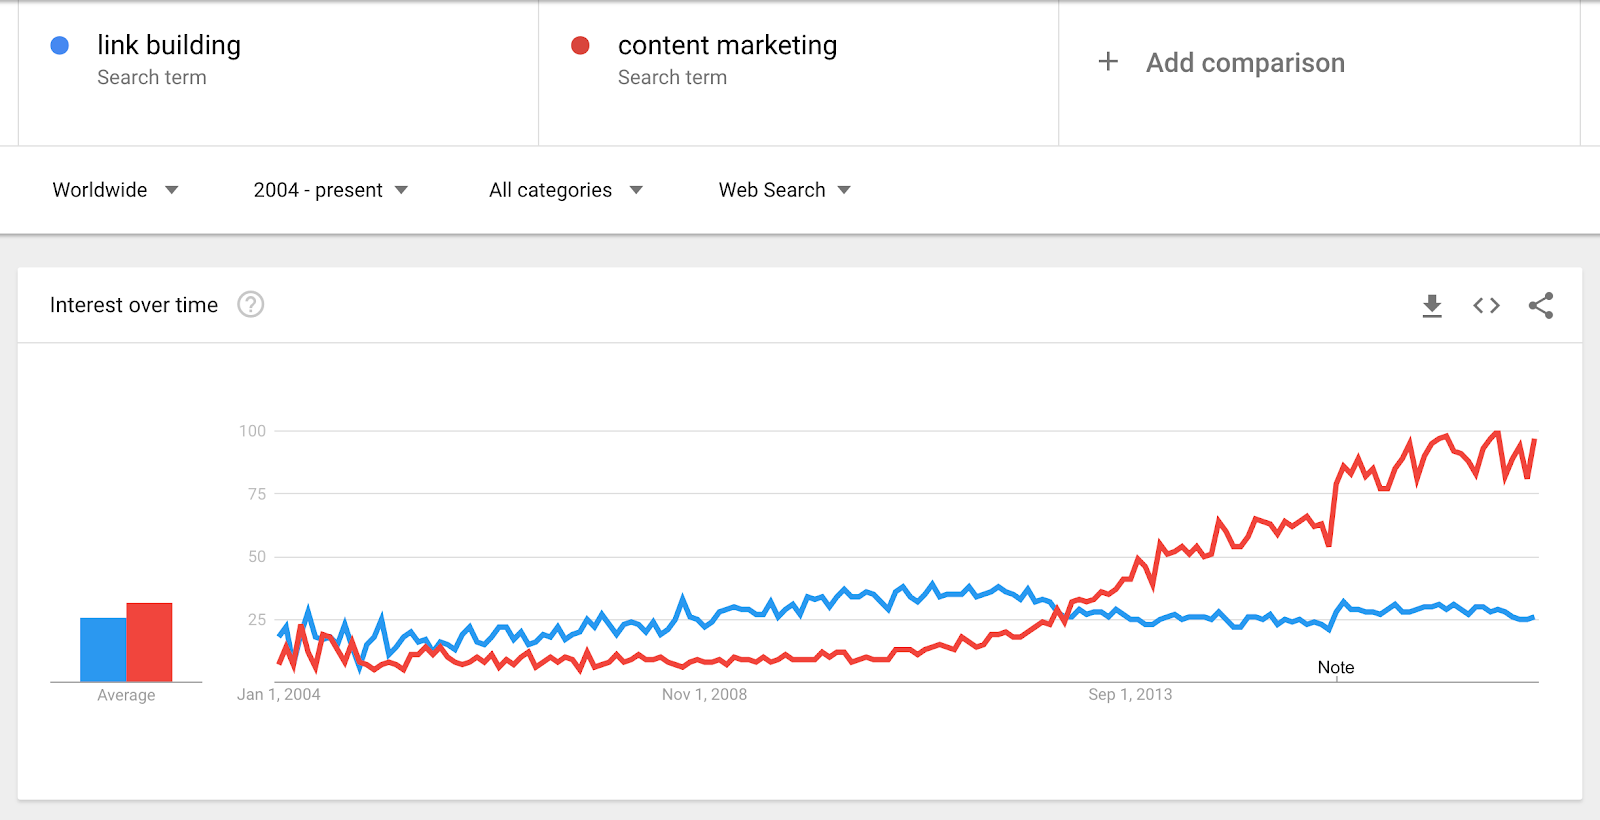 Link Building vs. Content Marketing - Google Trends